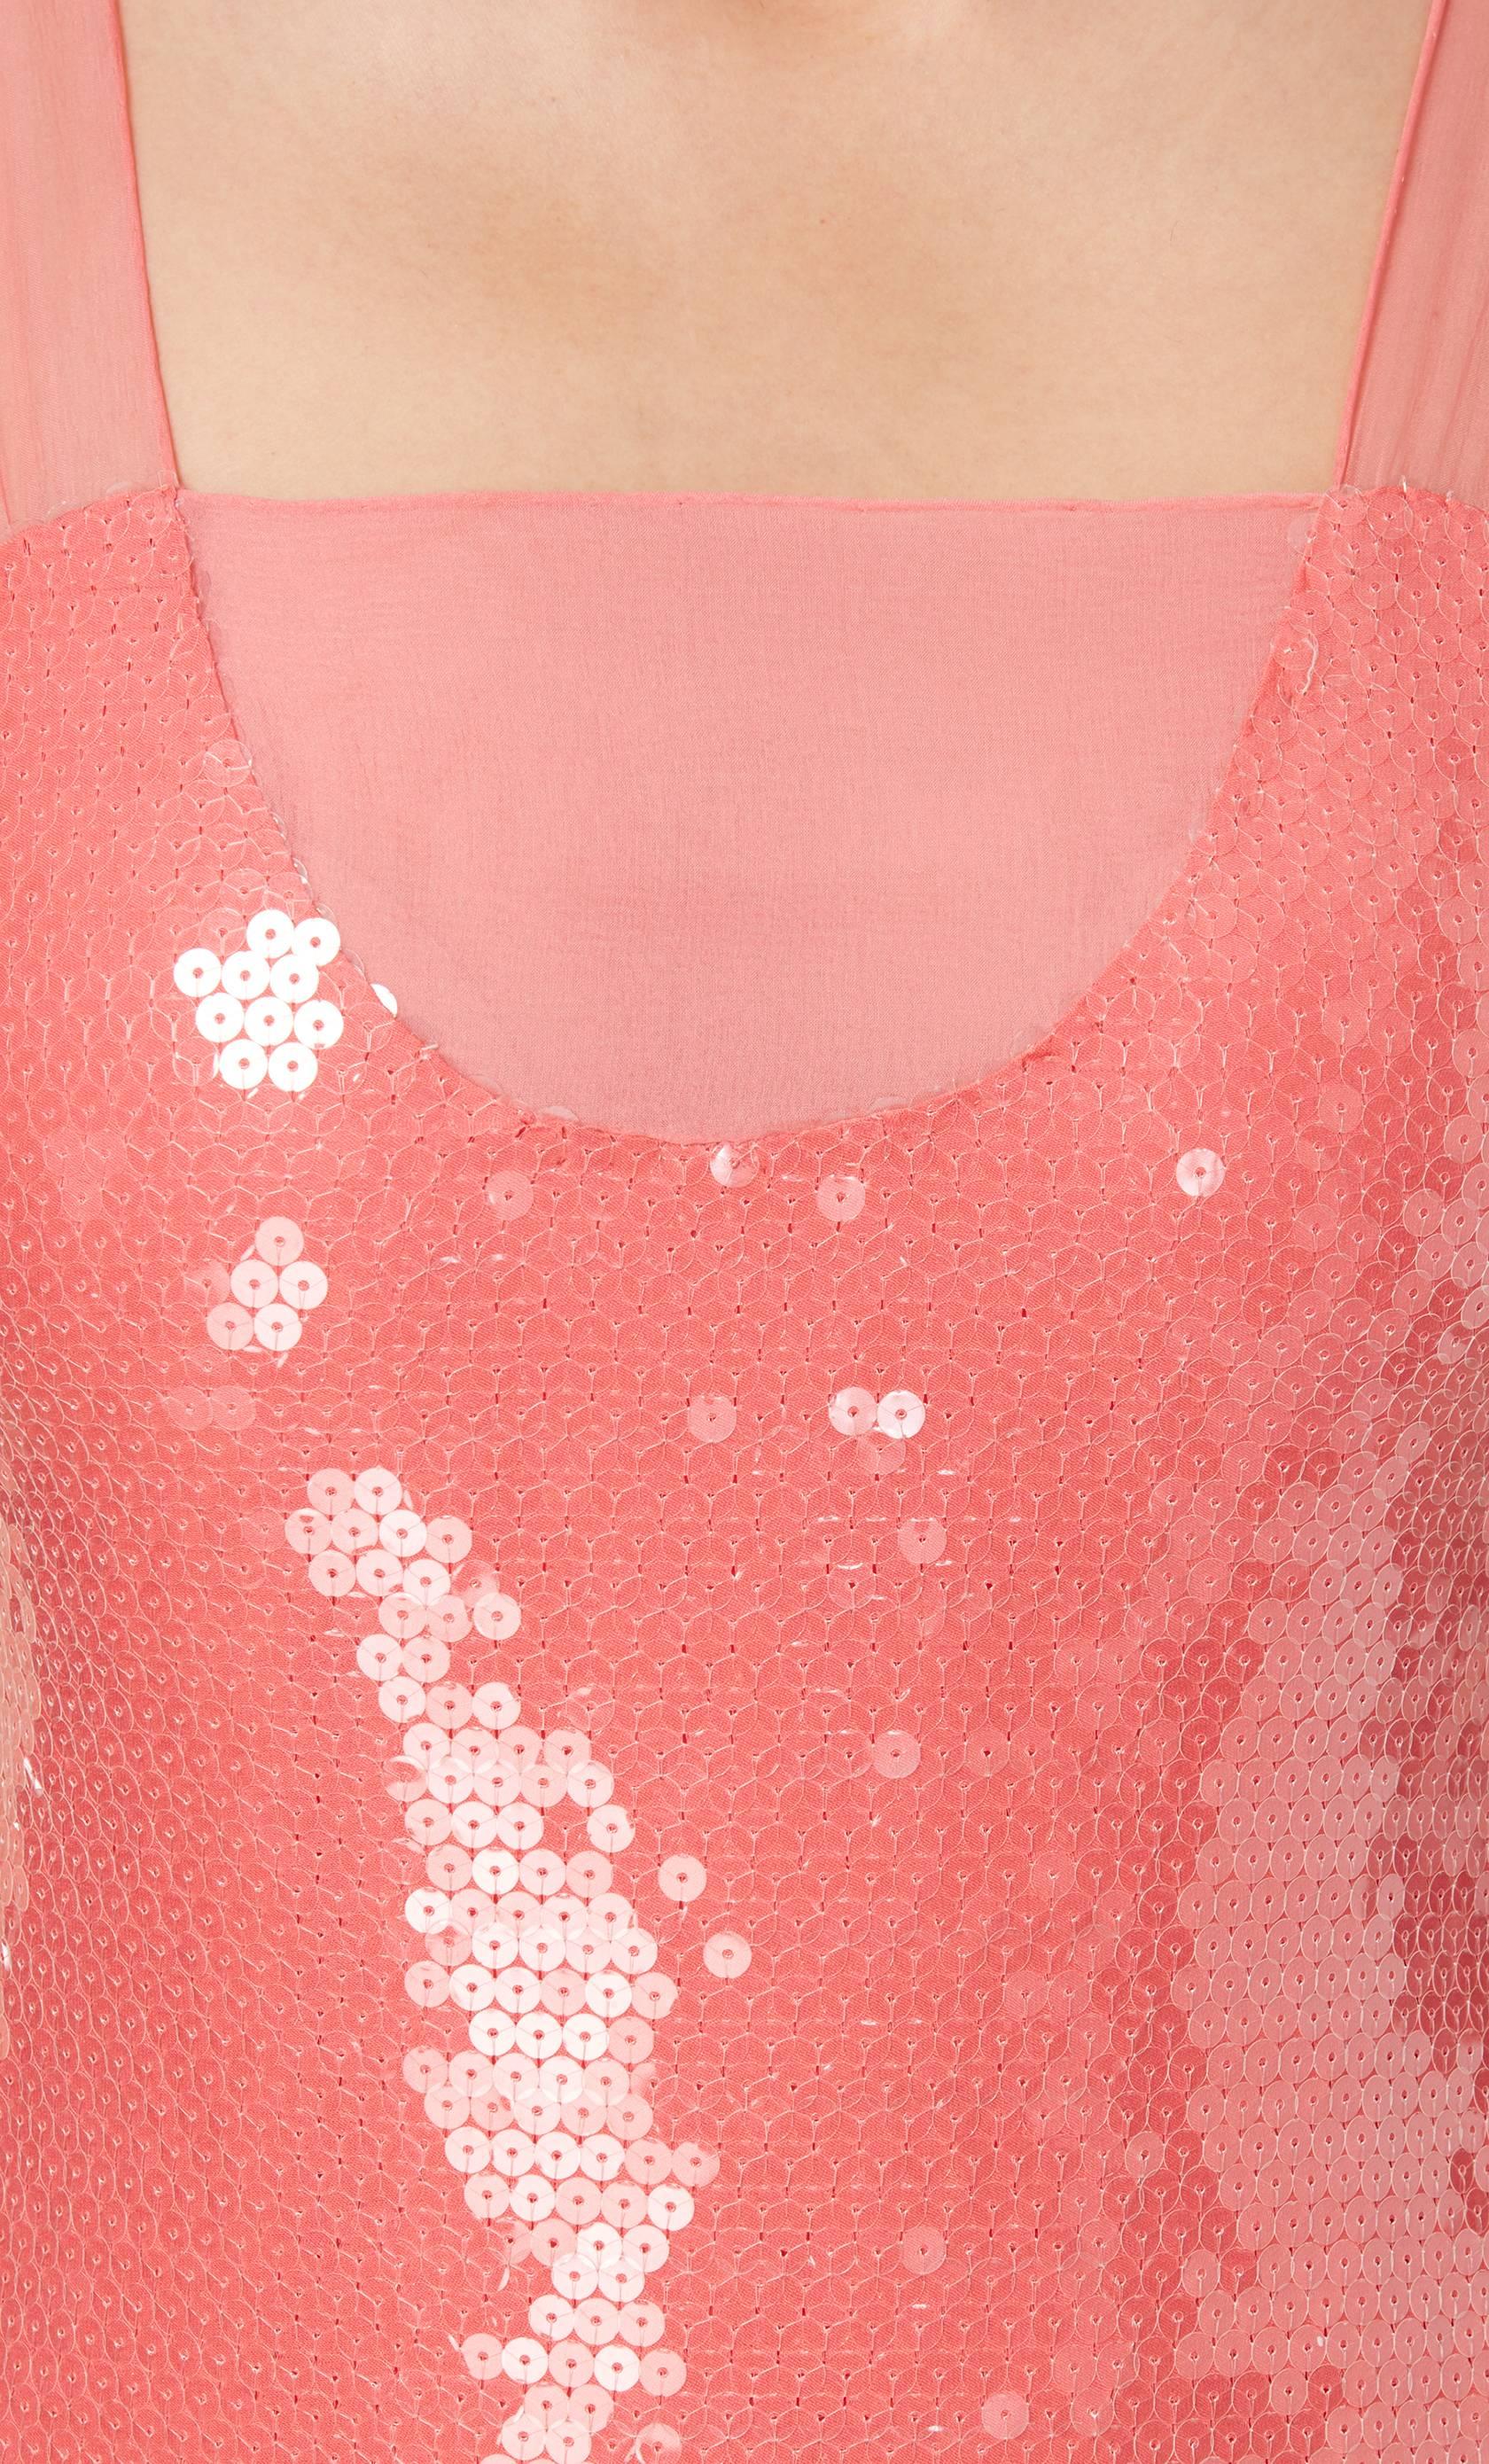 Women's Bill Blass Pink sequin gown, circa 1979 For Sale